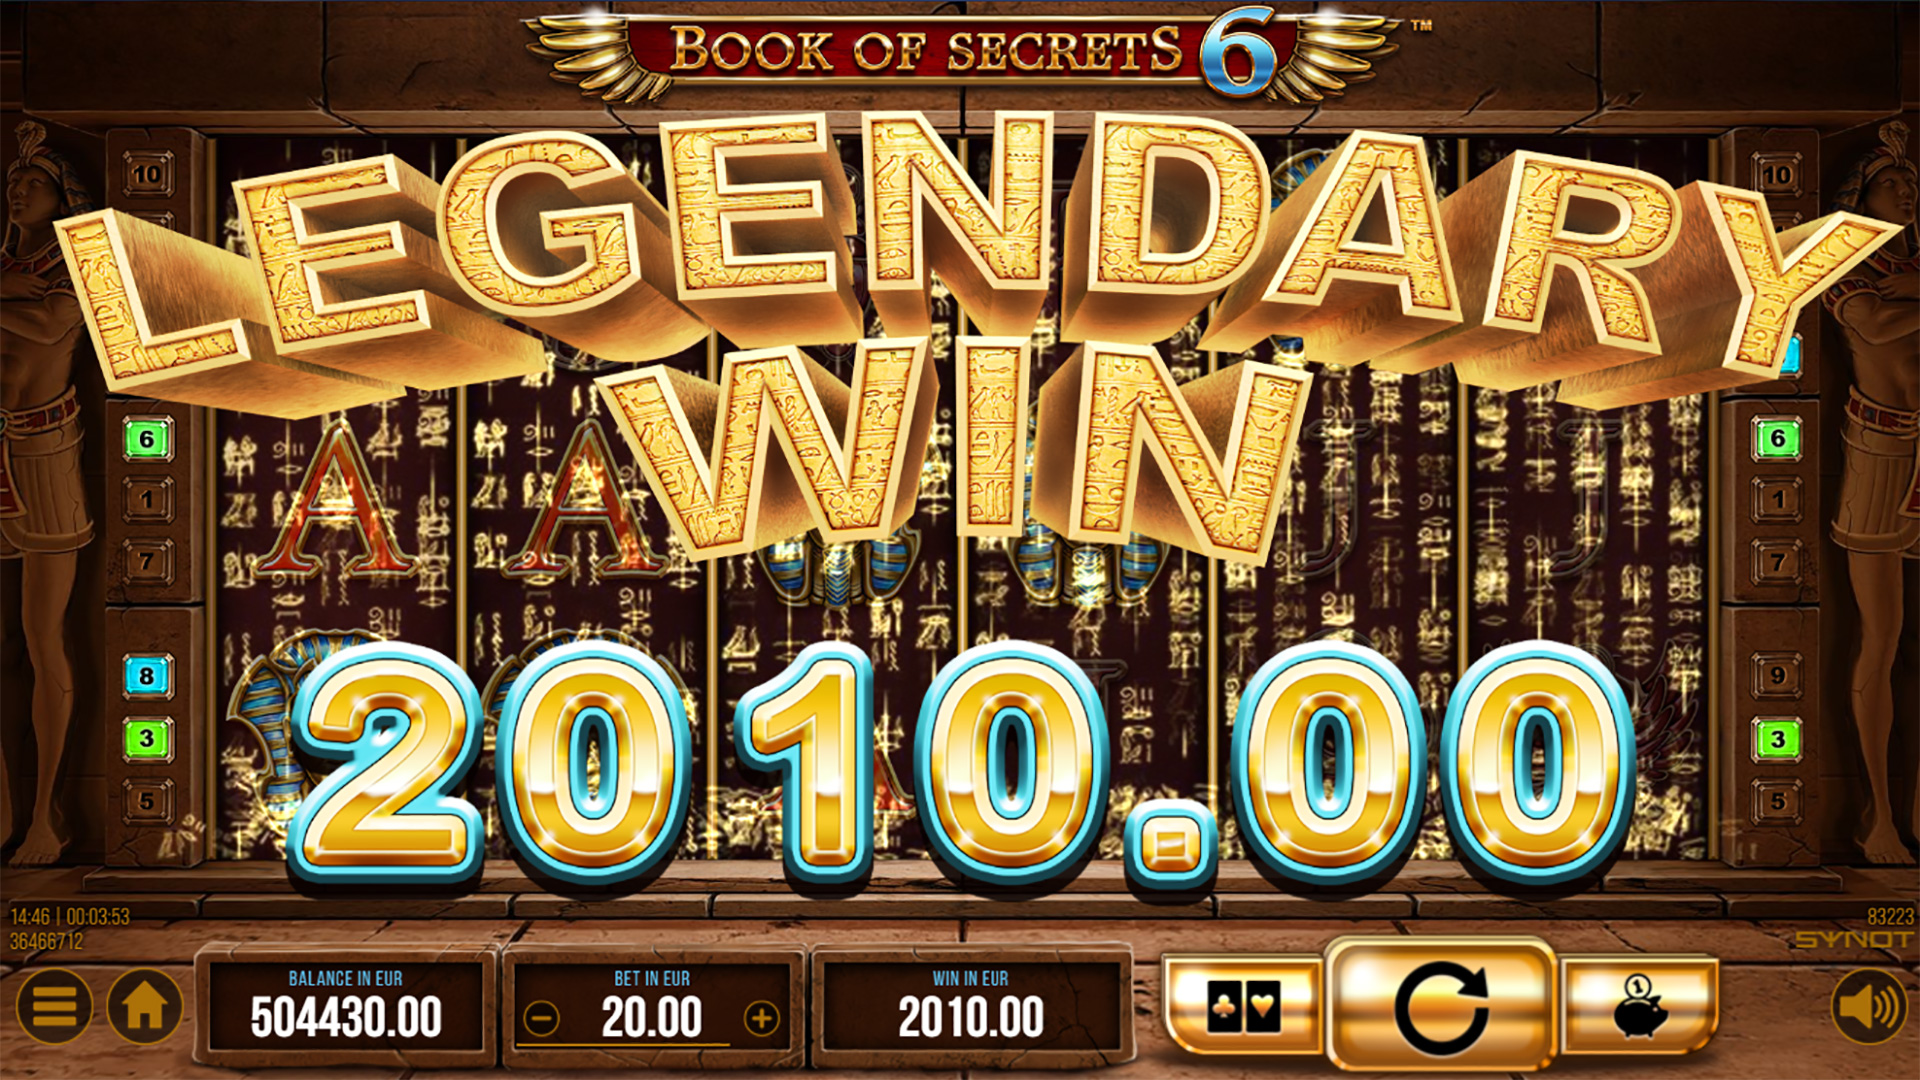 Book of Secrets 6 legendary Win base game